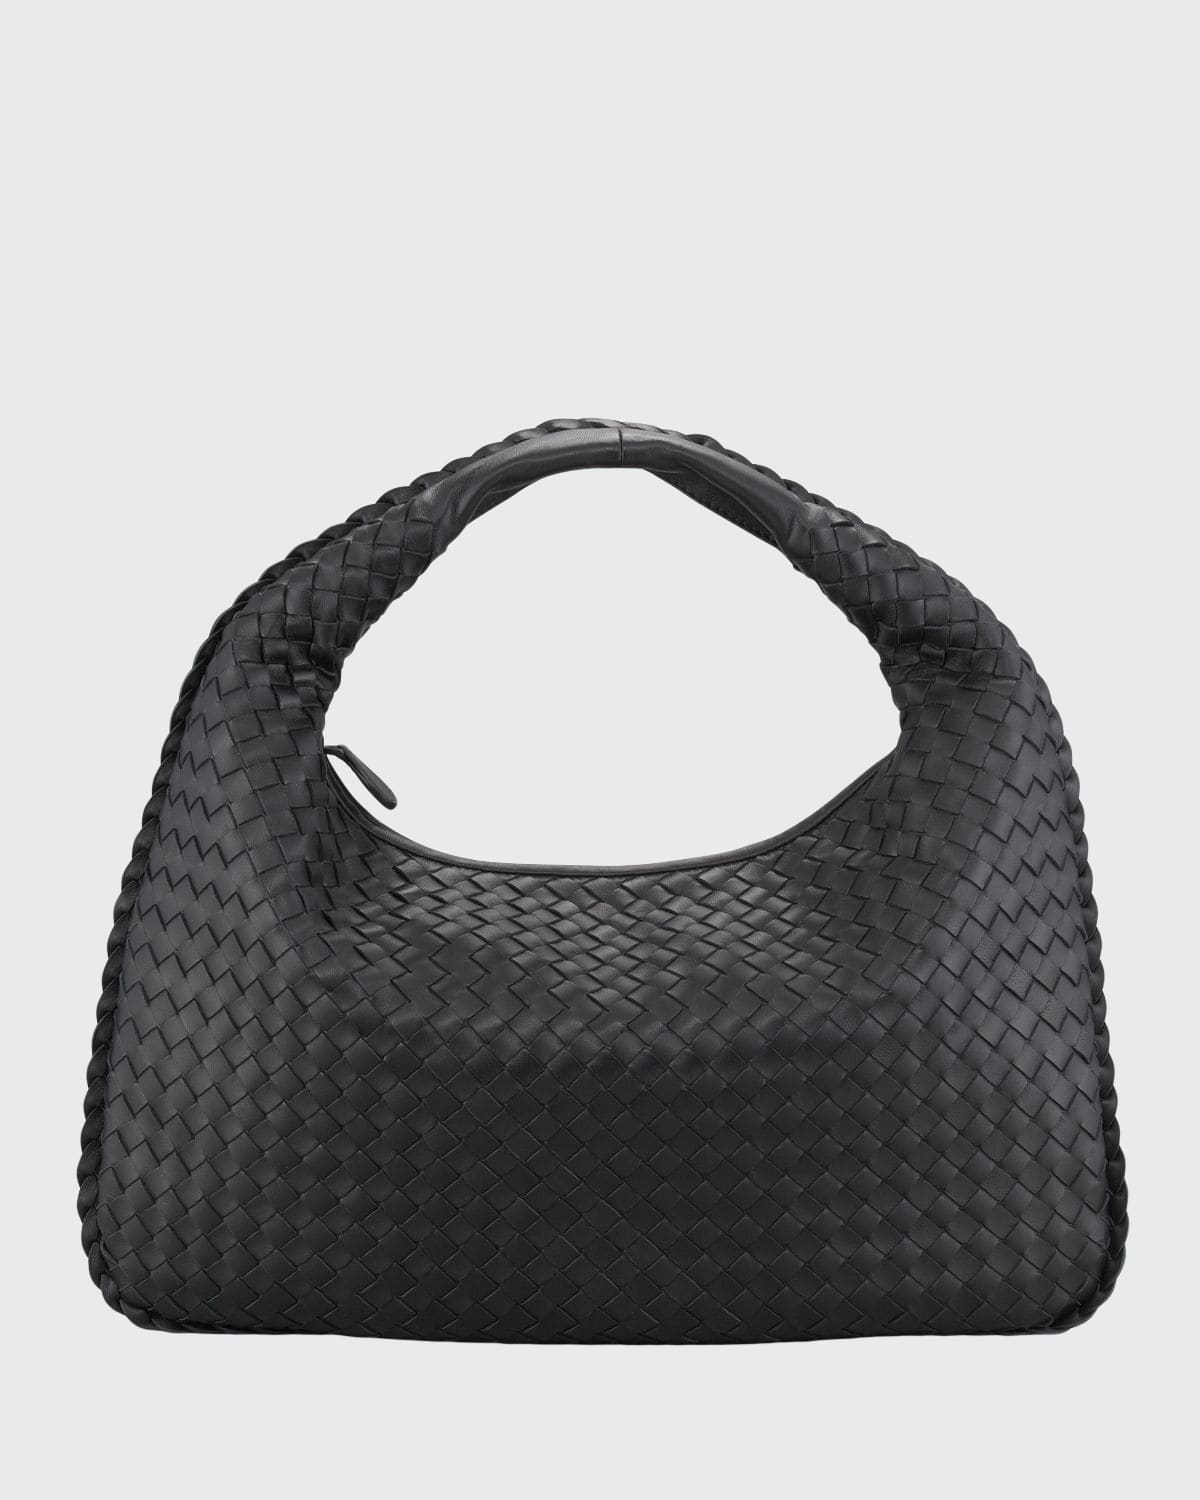 Veneta Intrecciato Medium Hobo Bag, Black